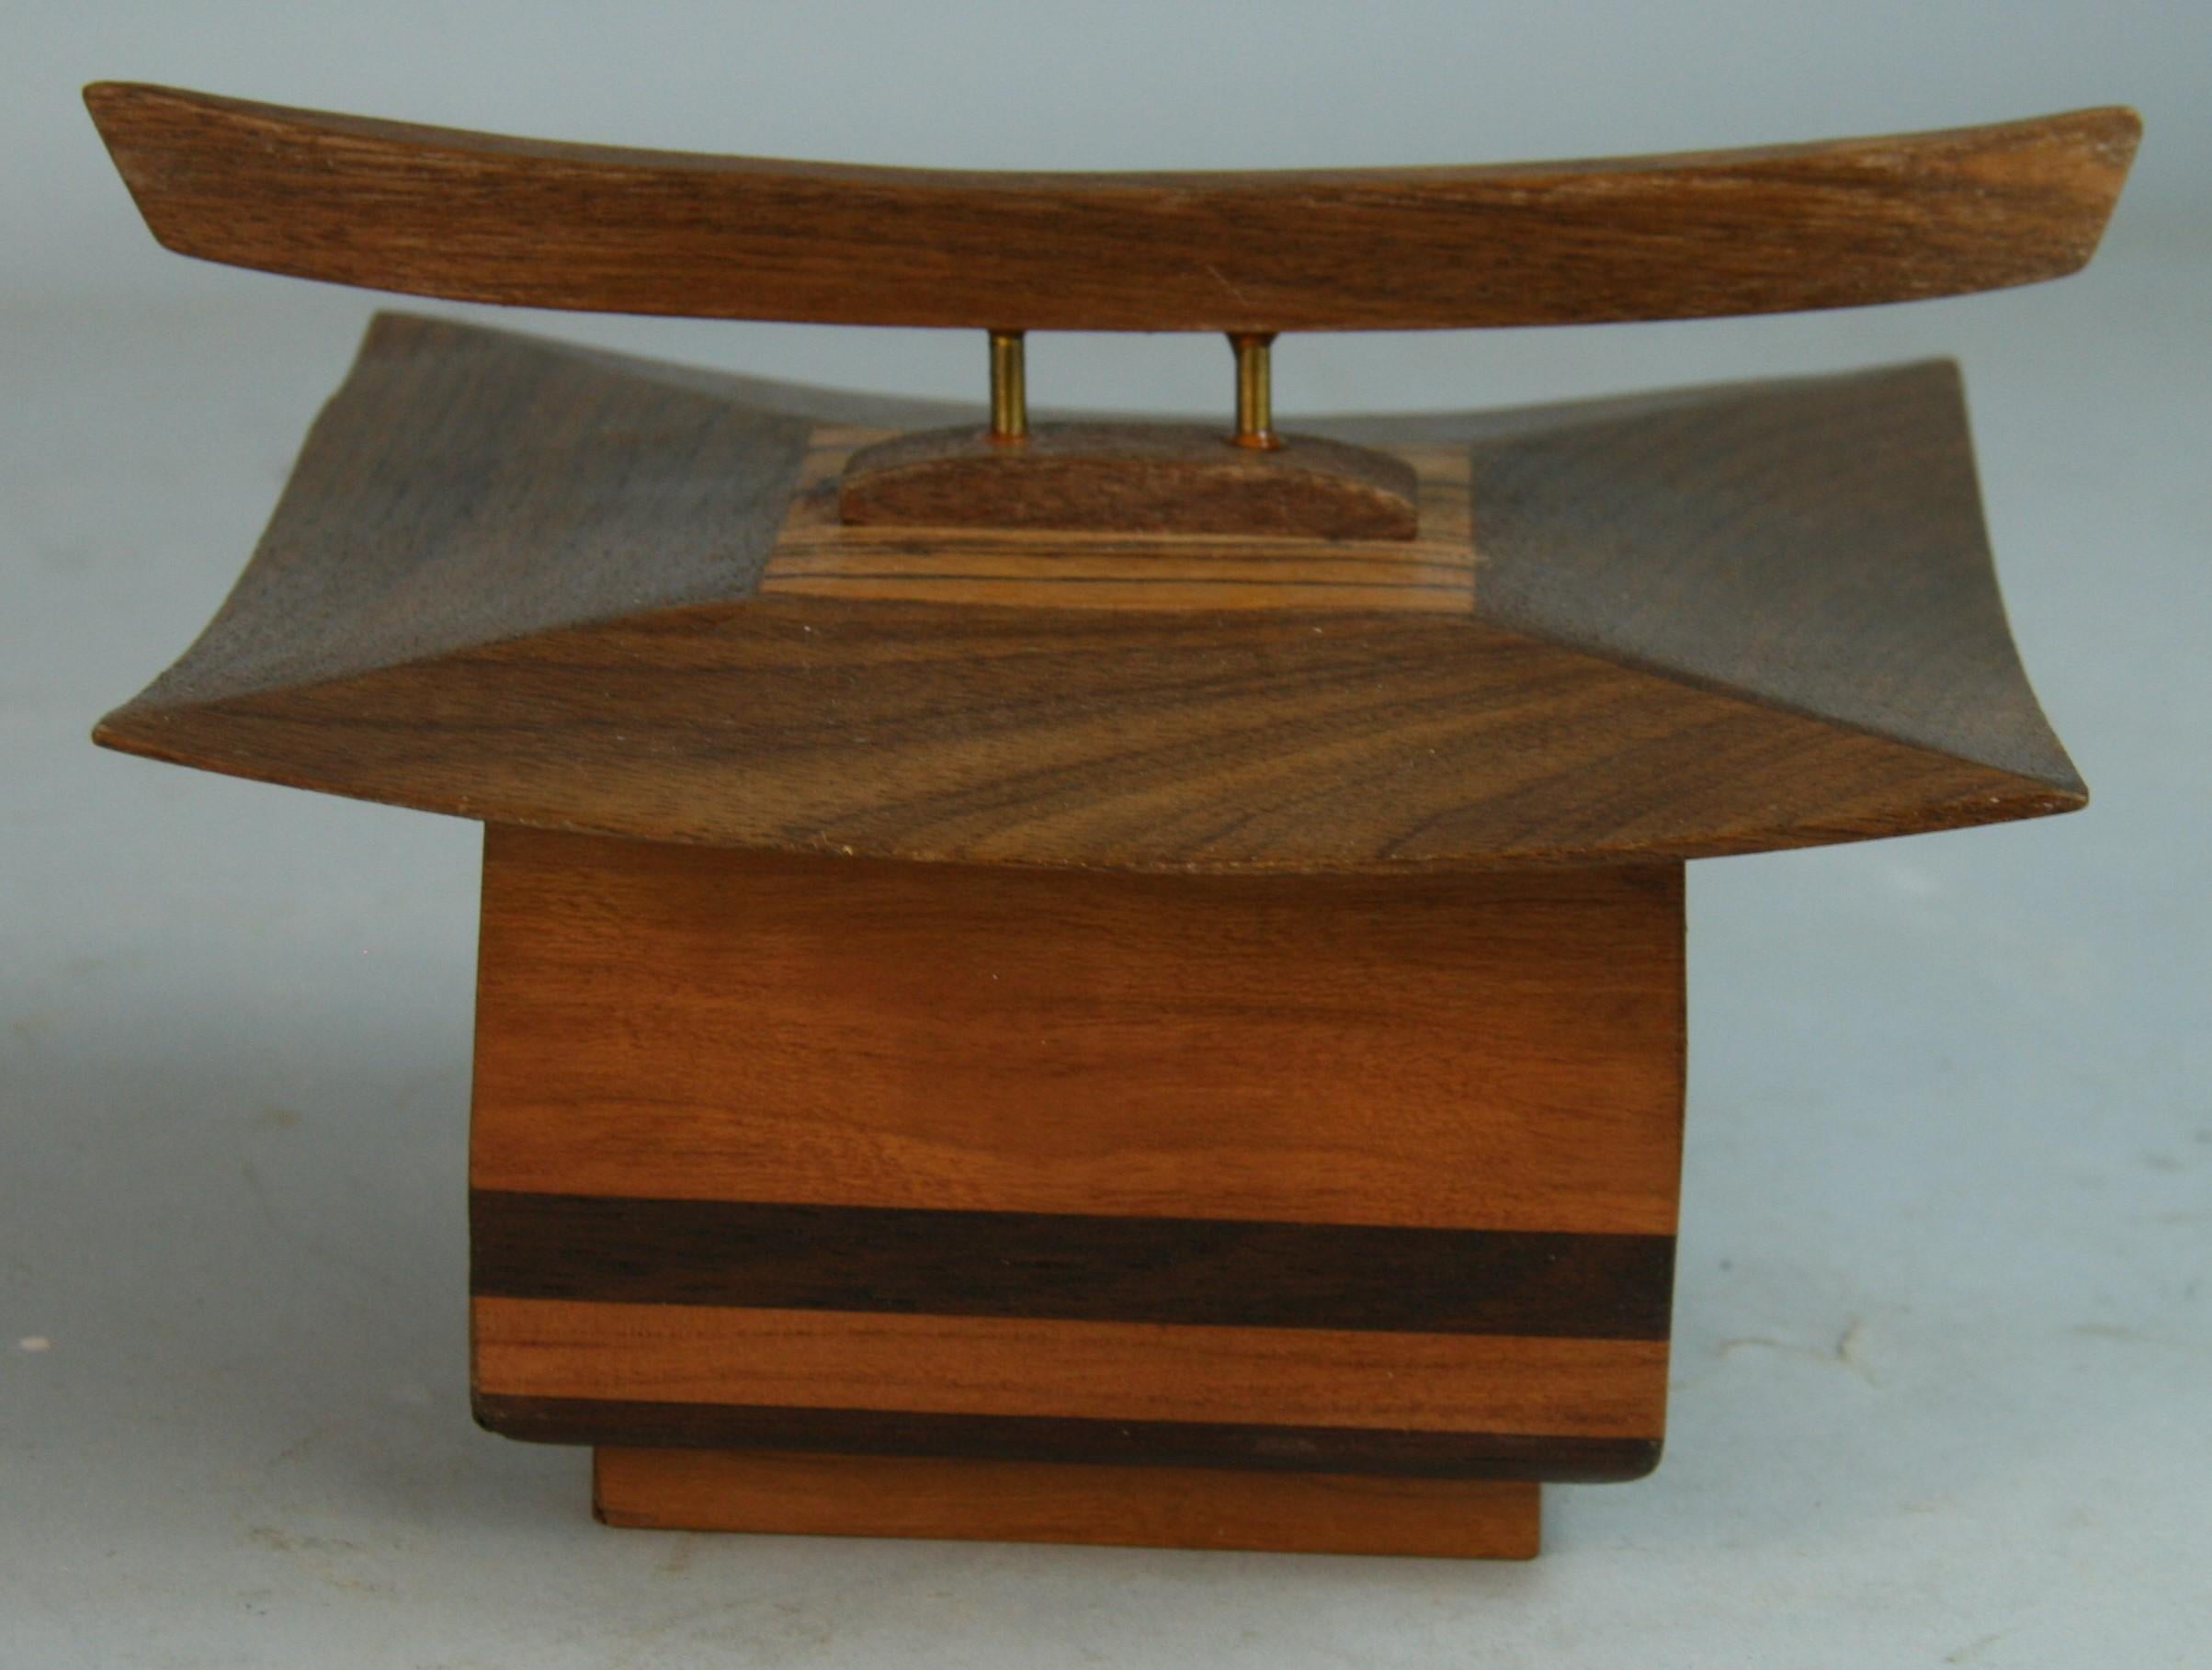 Hardwood Japanese Pagoda Trinket Box For Sale